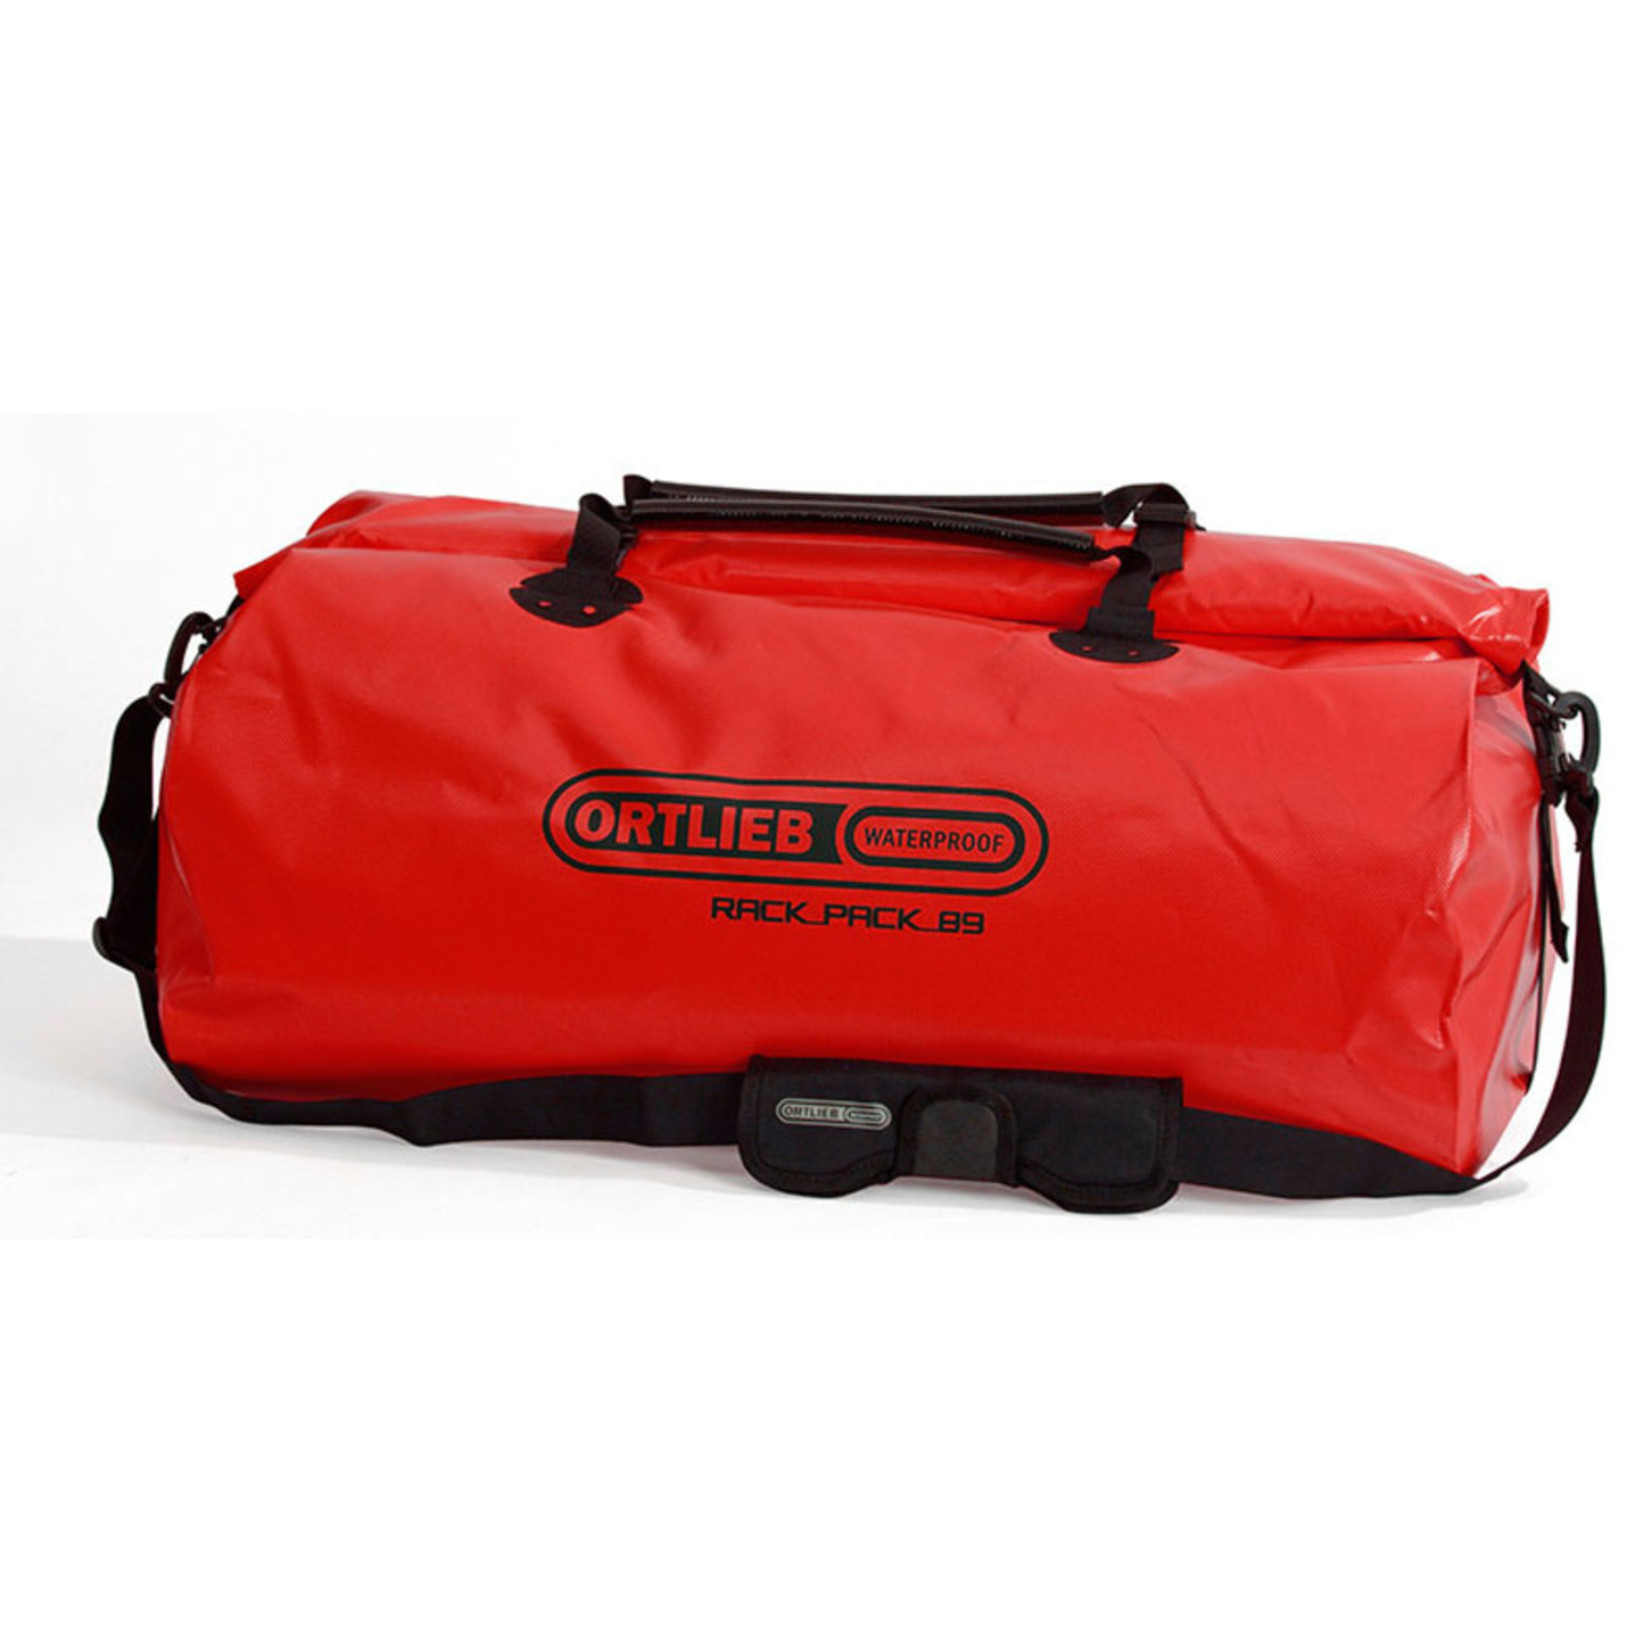 Ortlieb New Ortlieb K42 Rack-Pack Bag  X-Large- 89L Red Water Resistant